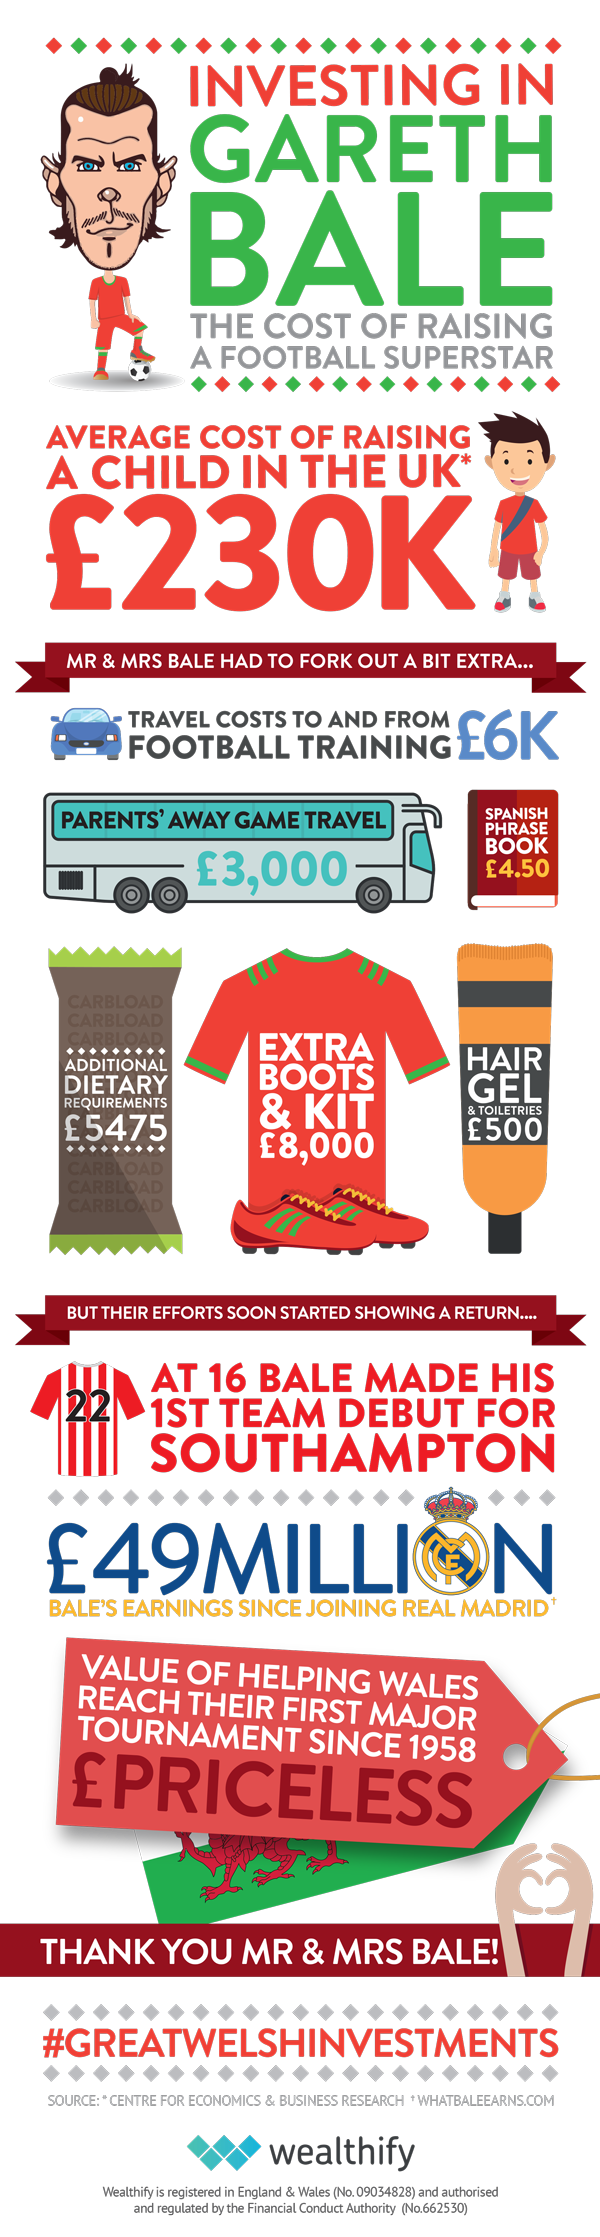 Gareth Bale Infographic full